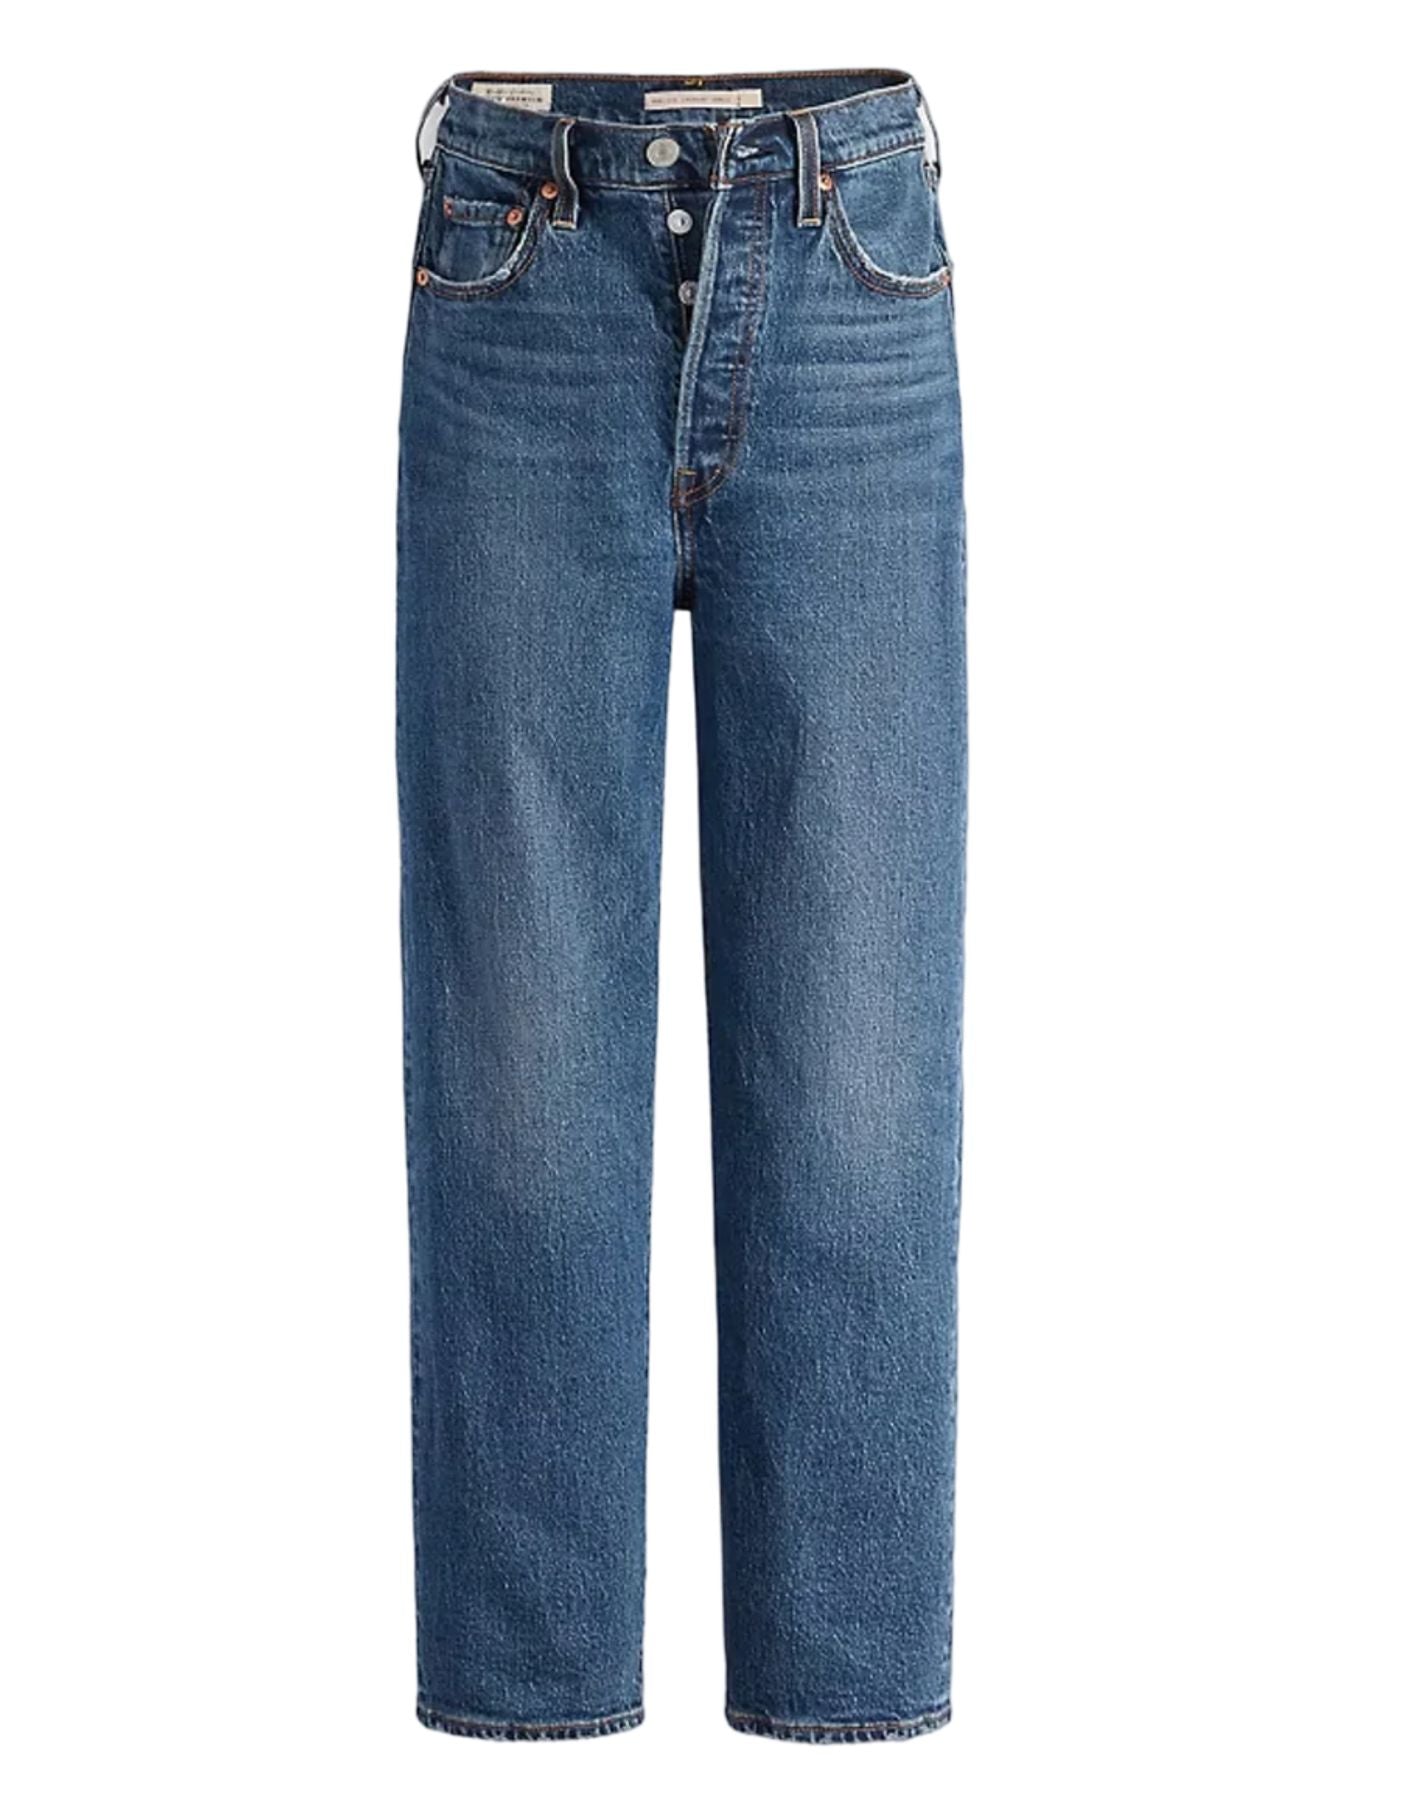 Jeans für Frau 726930163 Valley View Levi's